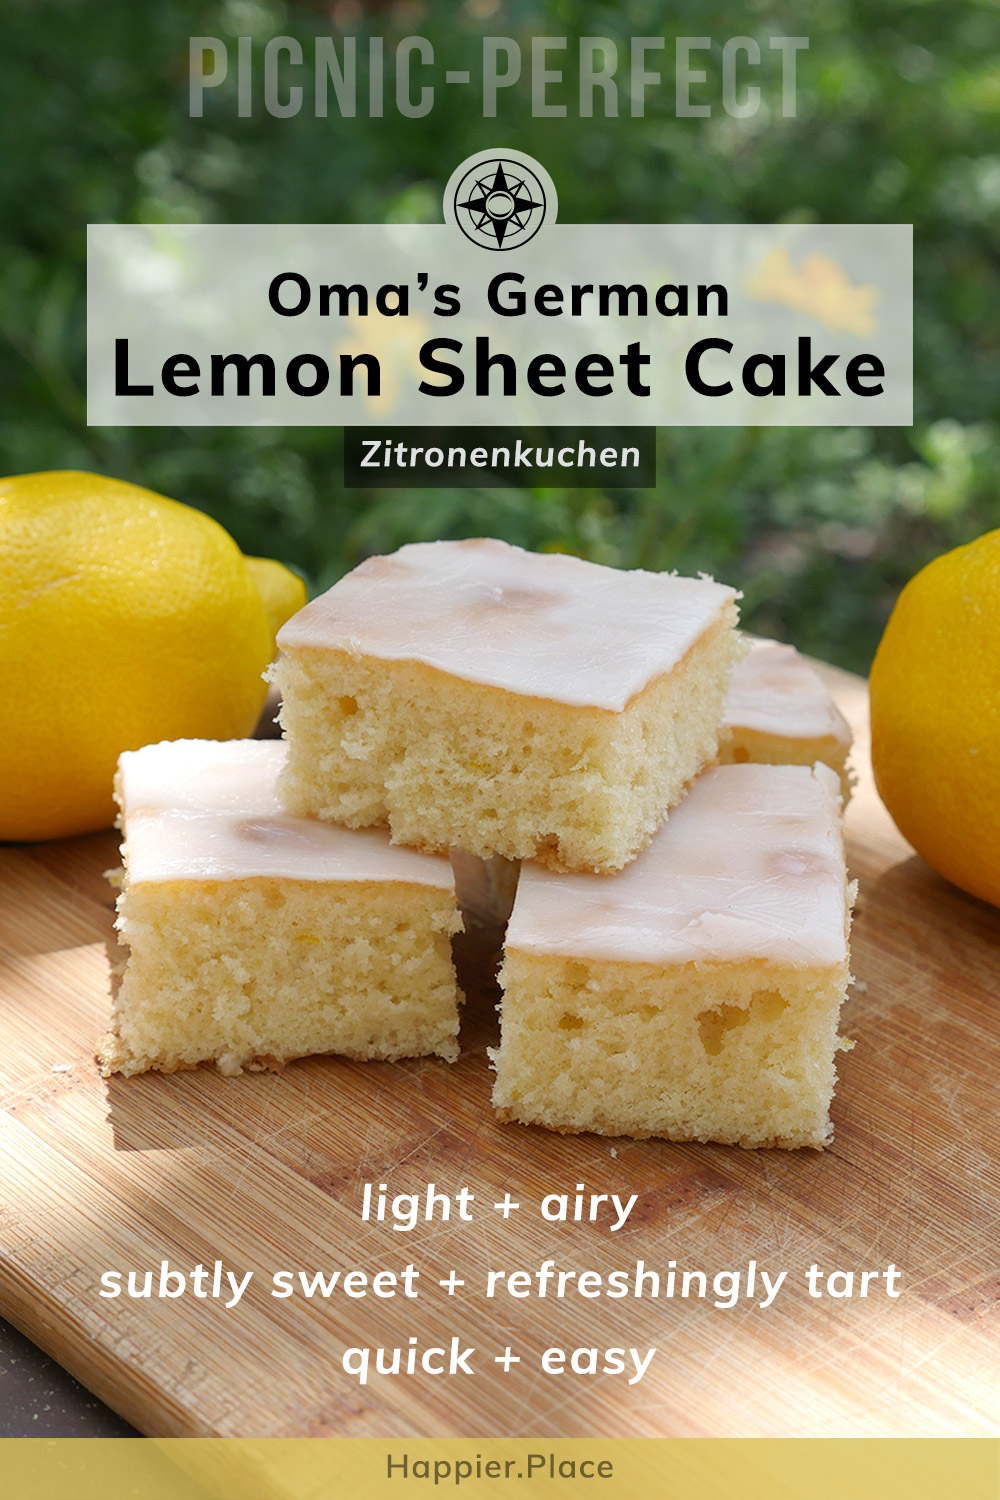 Oma's German lemon sheet cake: Zitronenkuchen. Picnic-perfect, easy, quick, light, airy, subtly-sweet and refreshingly tart. Oma's Rezept, German grandma's recipe, deutscher Kuchen, Happier Place. #picnic #easyrecipe #HappierPlace #germanbaking #baking